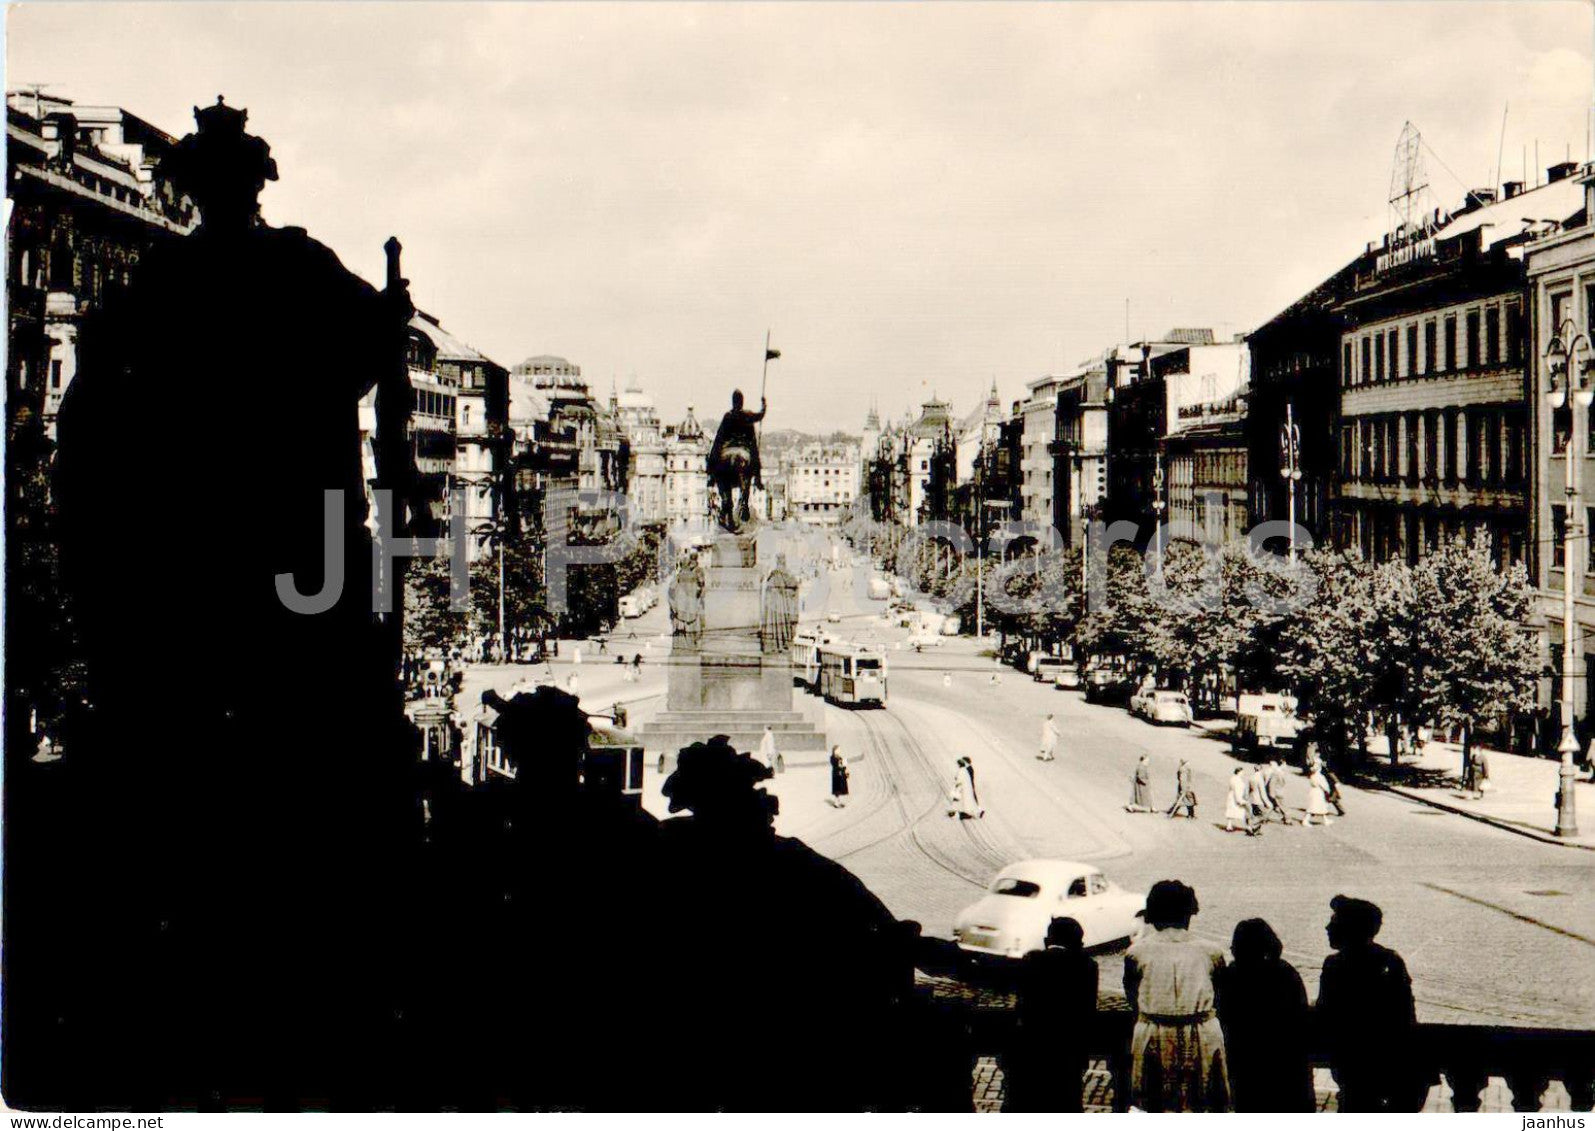 Praha - Prague - Vaclavske Namesti - Wenceslas Square - tram - 065947 - Czech Republic - Czechoslovakia - unused - JH Postcards